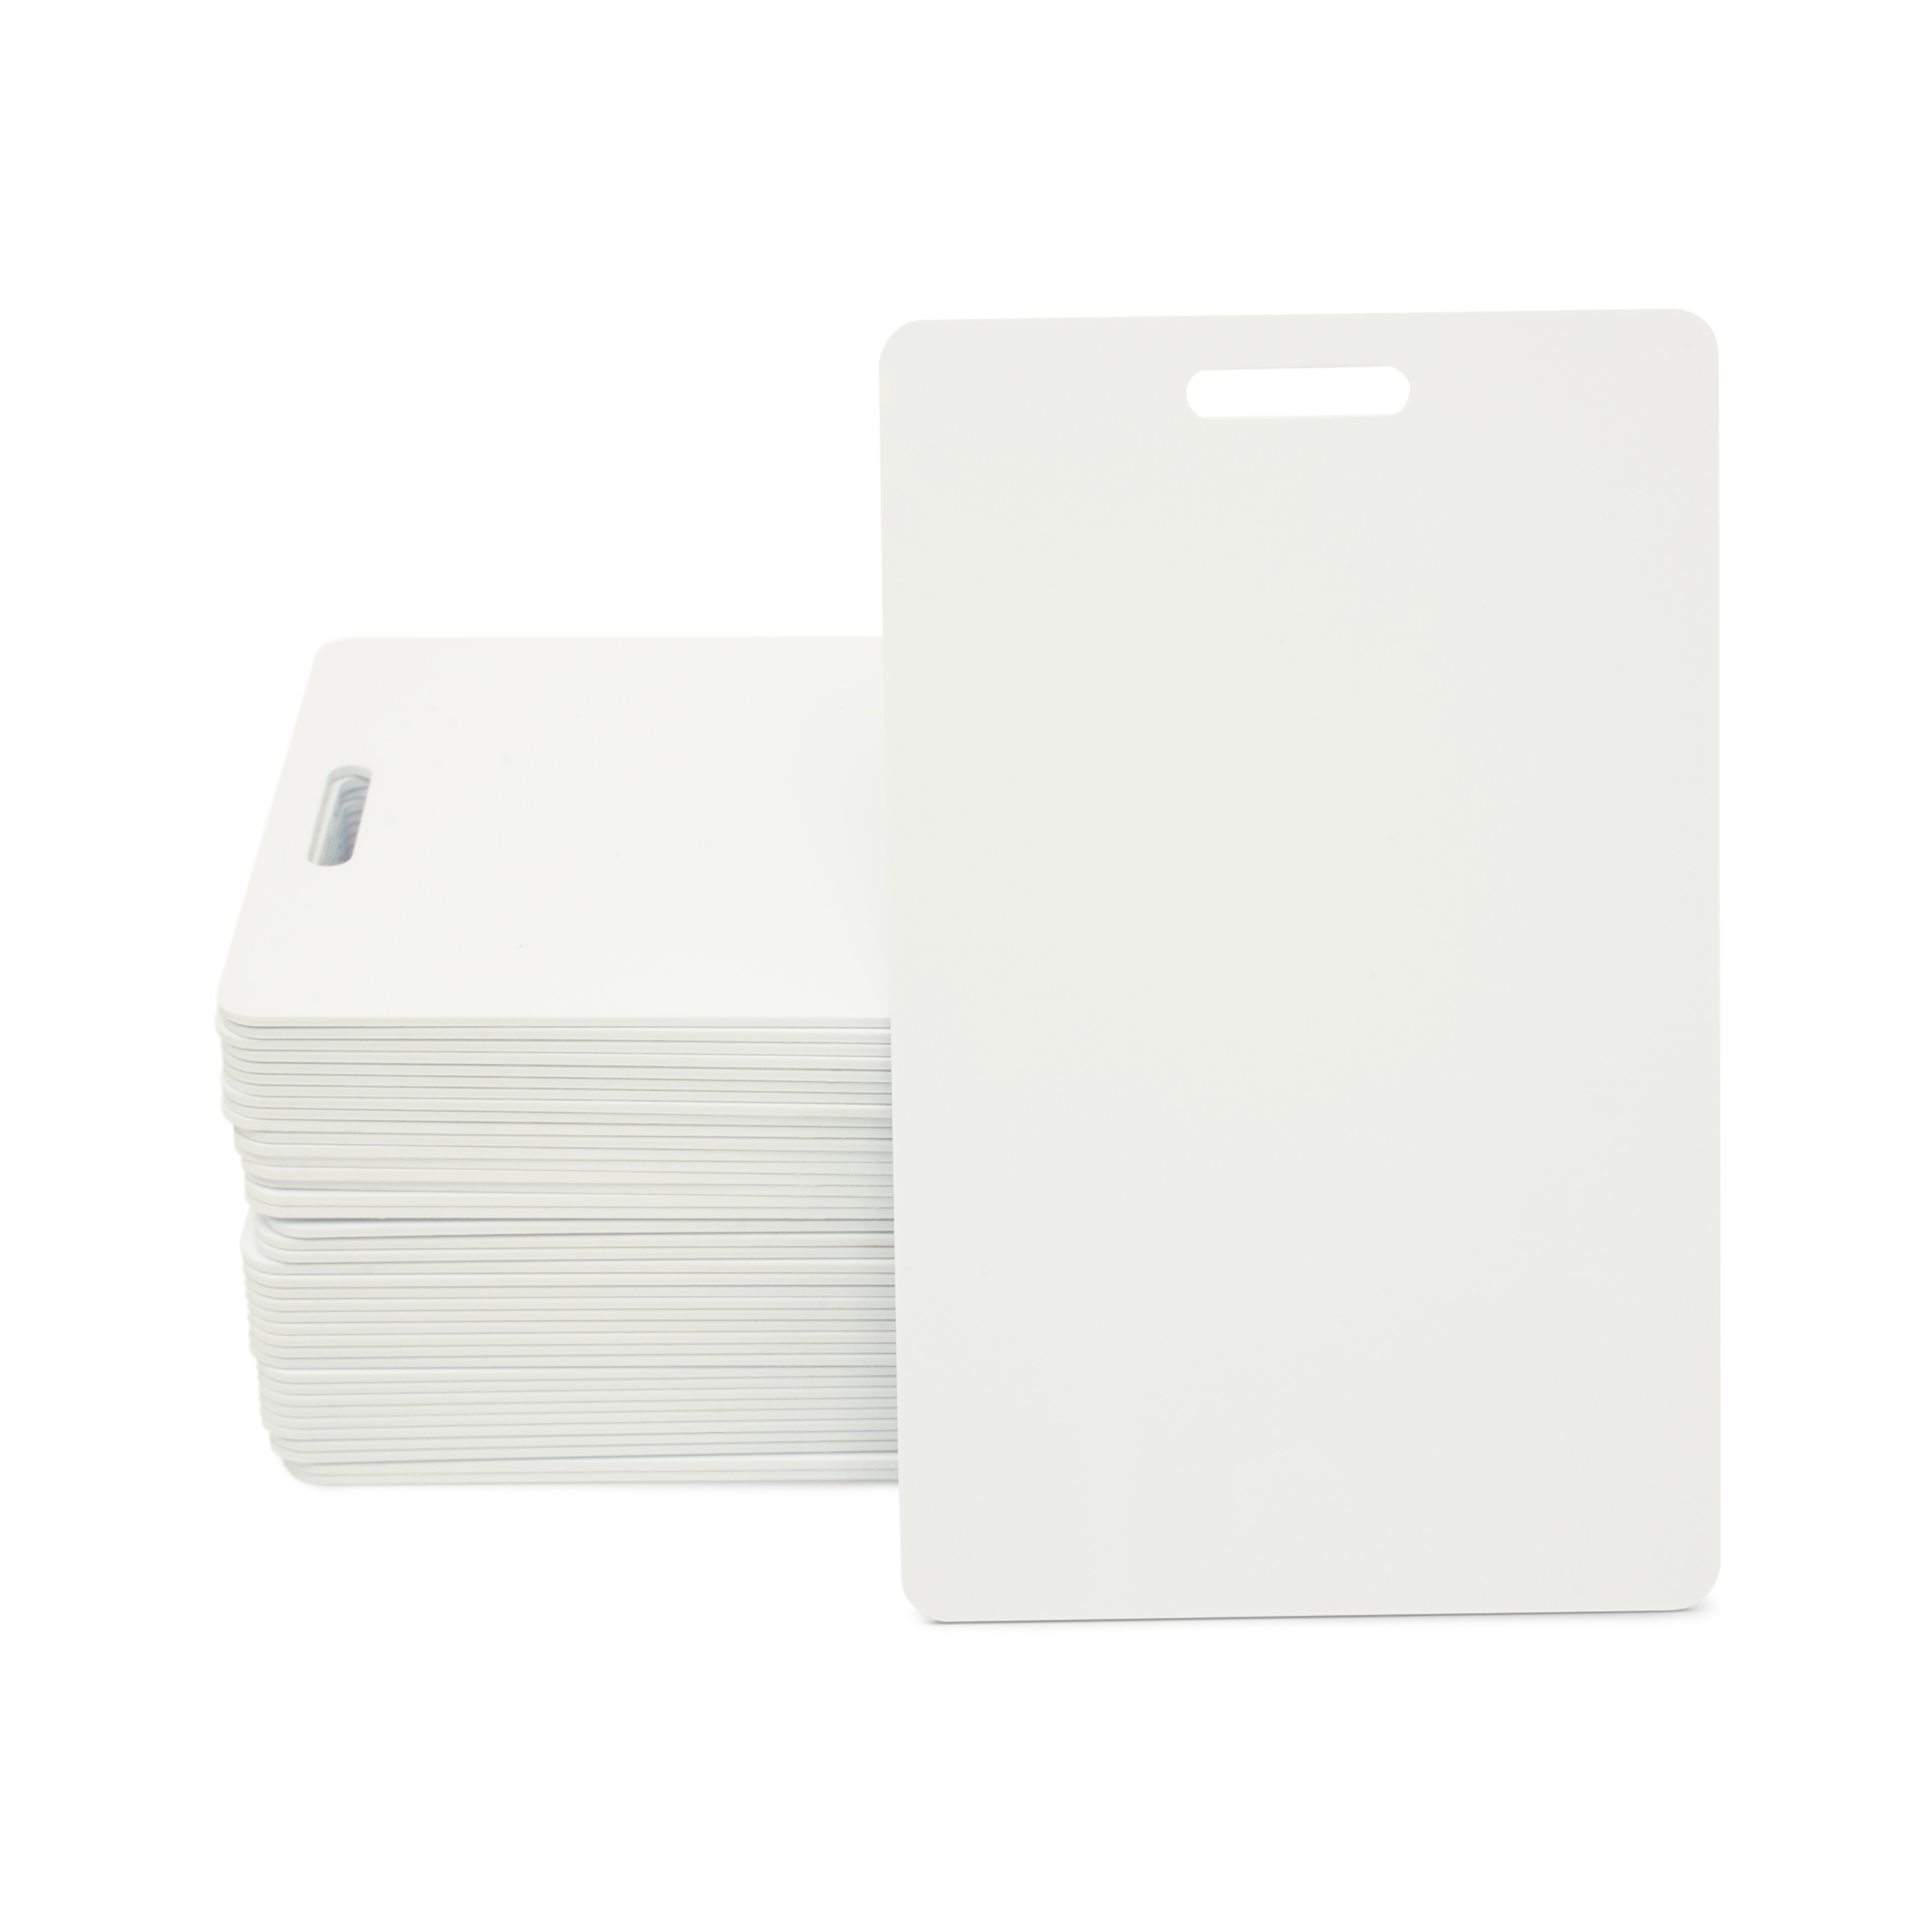 NFC Card PVC - 85,6 x 54 mm - NTAG213 - 180 Byte - white - portrait with slot